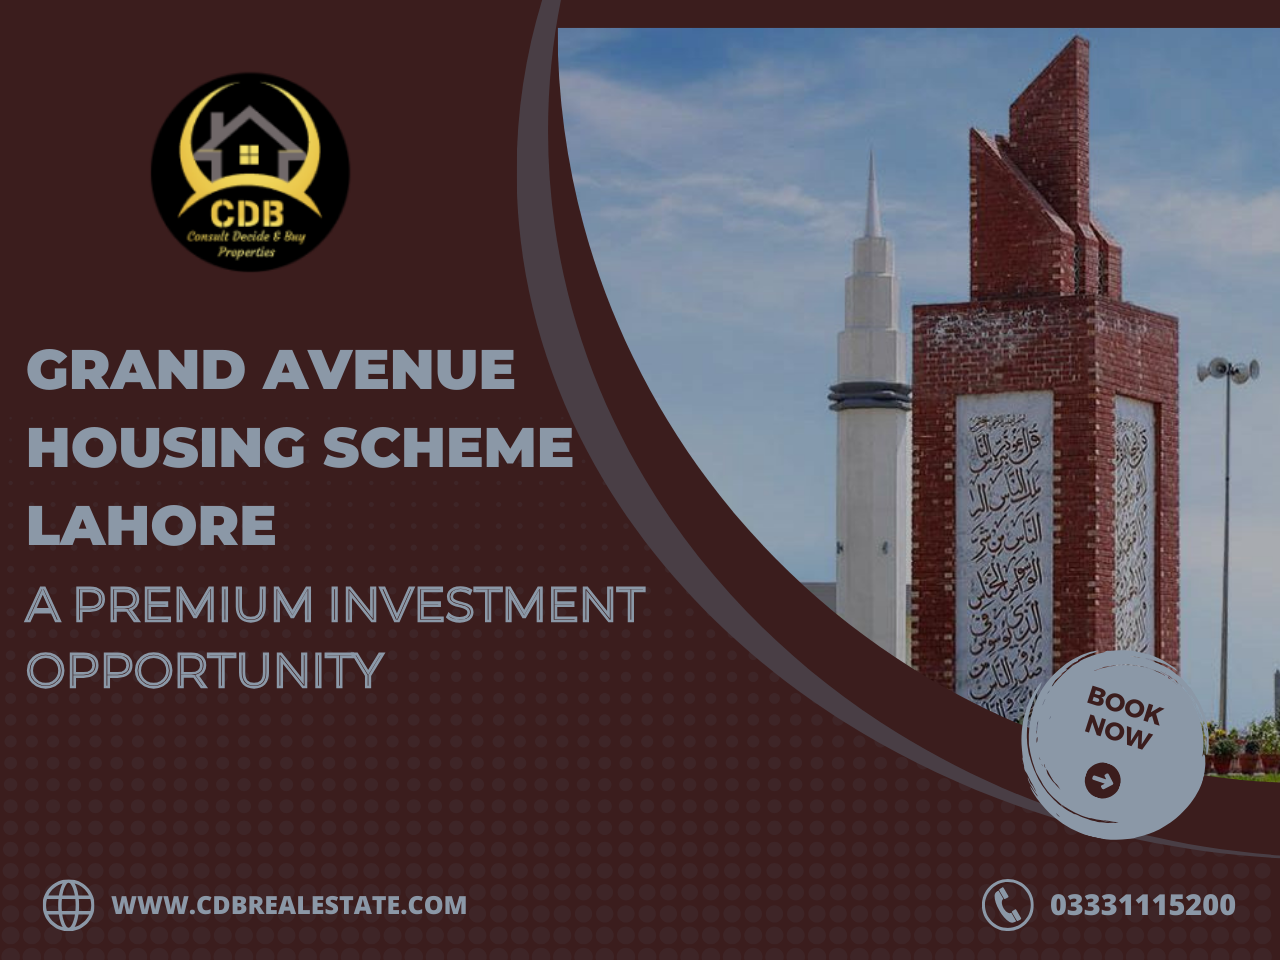 Grand Avenue Housing Scheme Lahore: A Premium Investment Opportunity